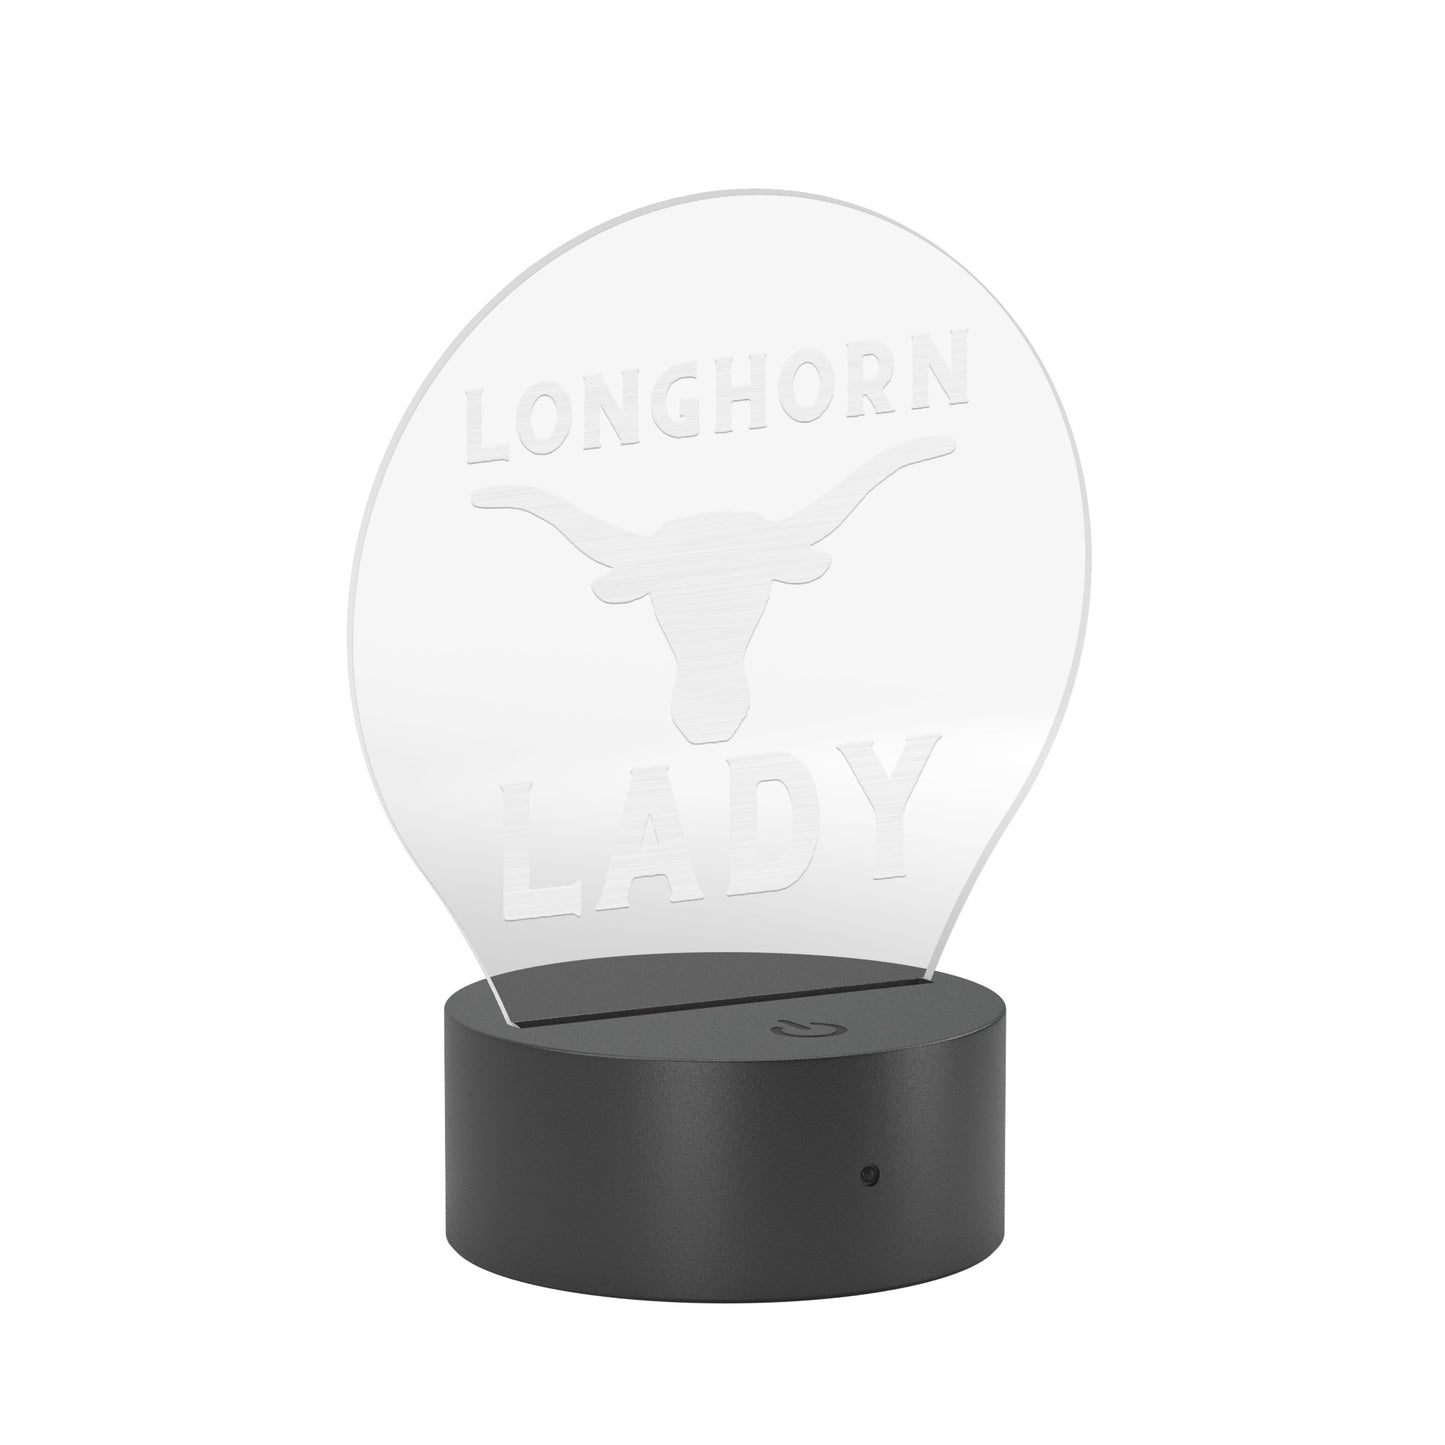 Longhorn Lady University Acrylic LED Table Light